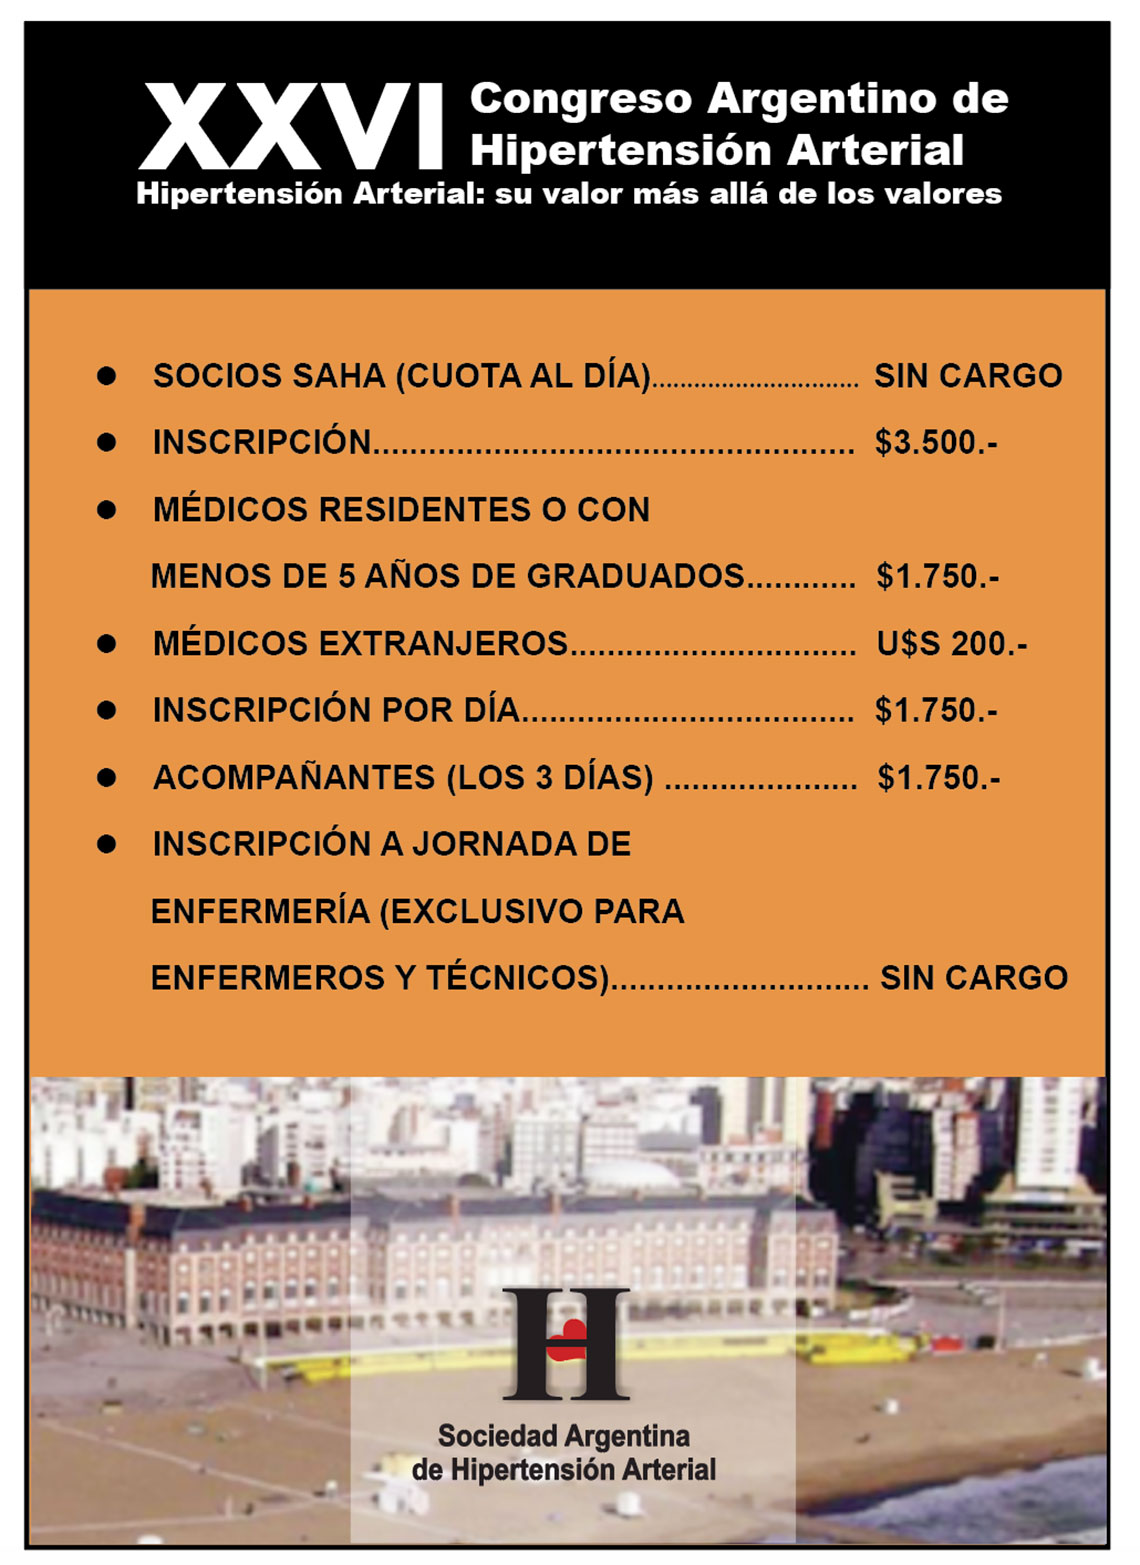 XXVI Congreso, Mar del Plata 2019, tarifas